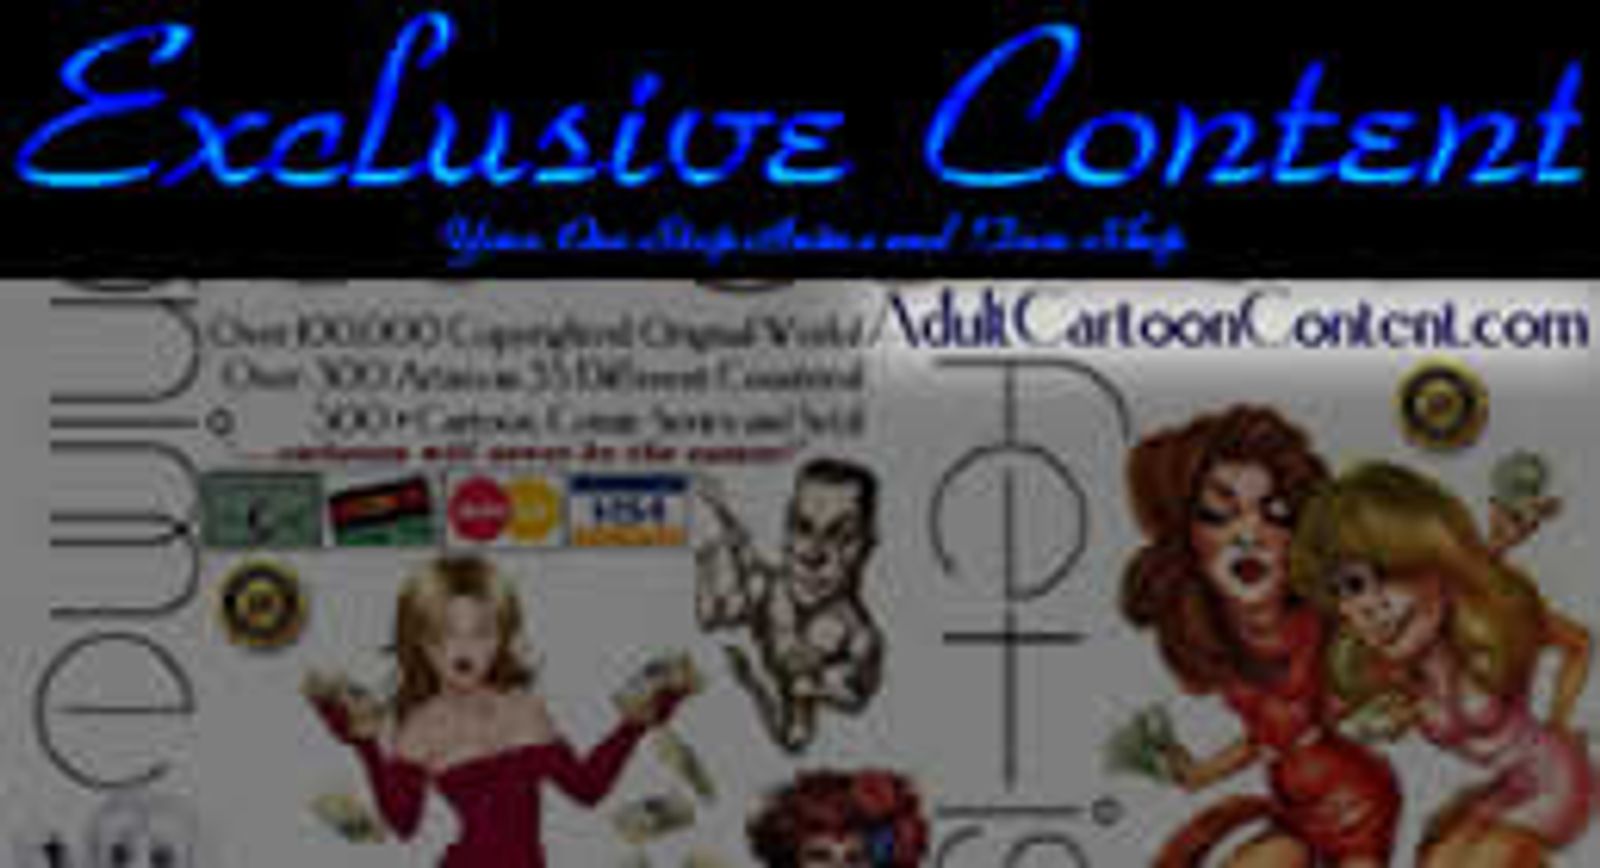 Exclusive Content, OLS Acquire Adult Cartoon Content Market/Distro Divisions